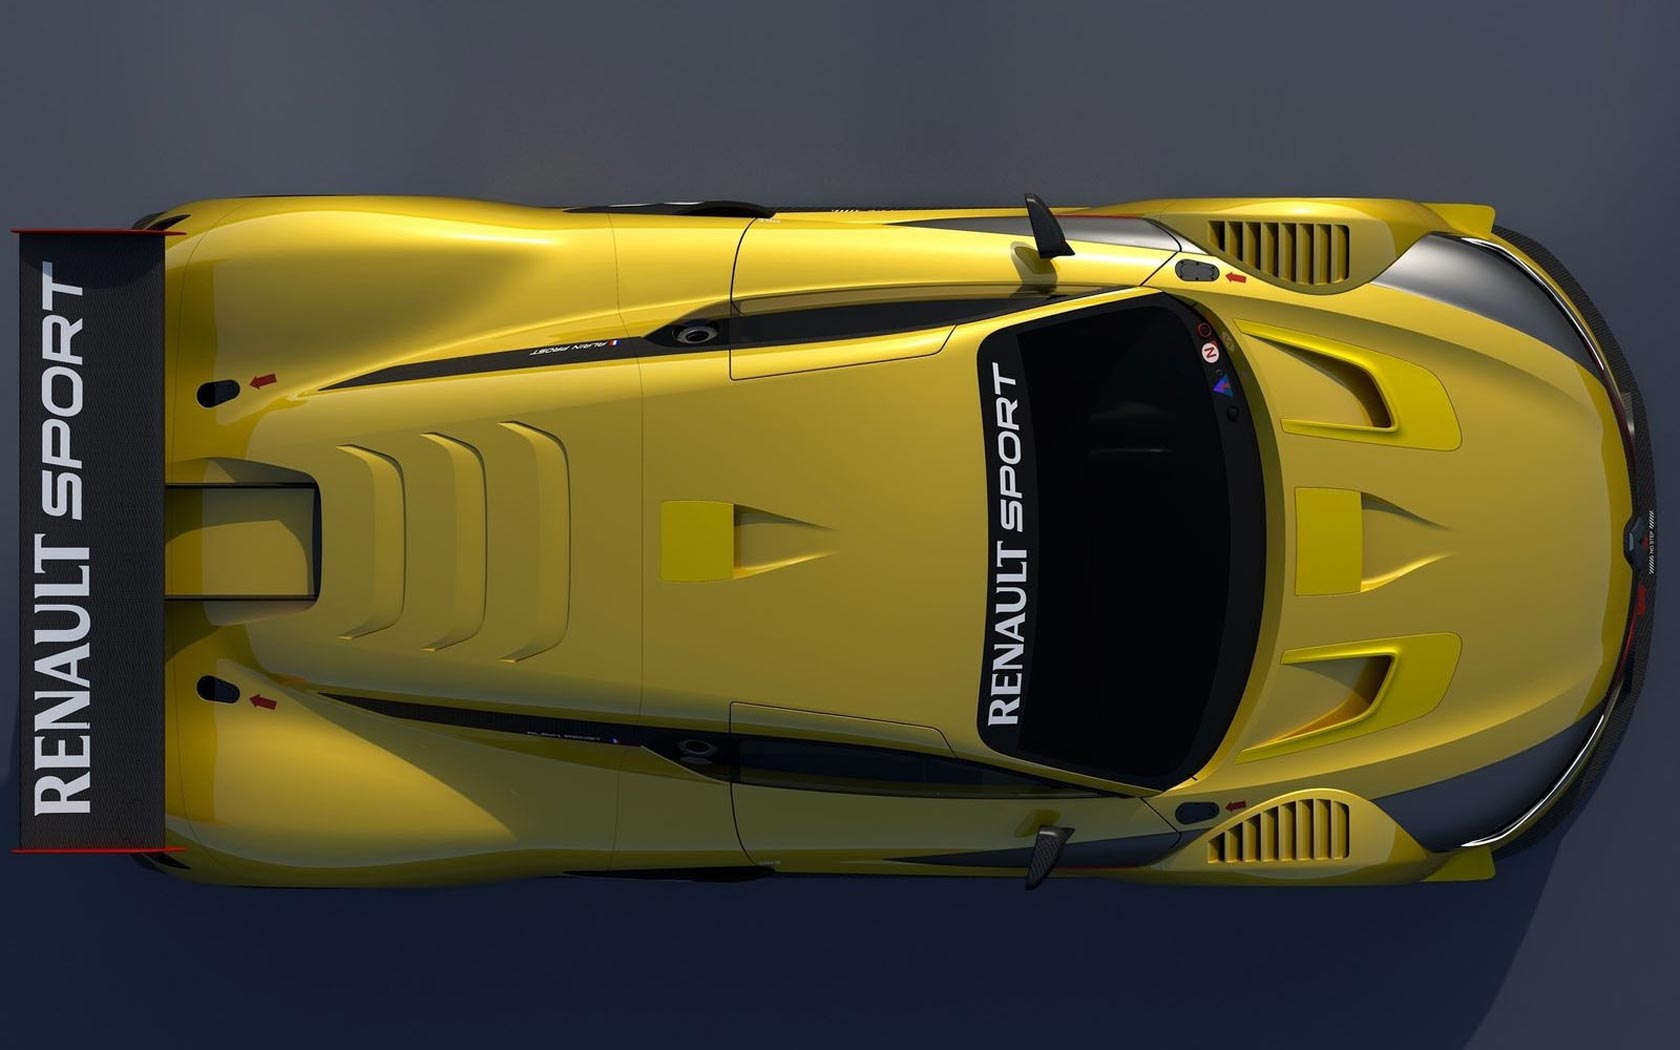  Renault Sport RS 01 